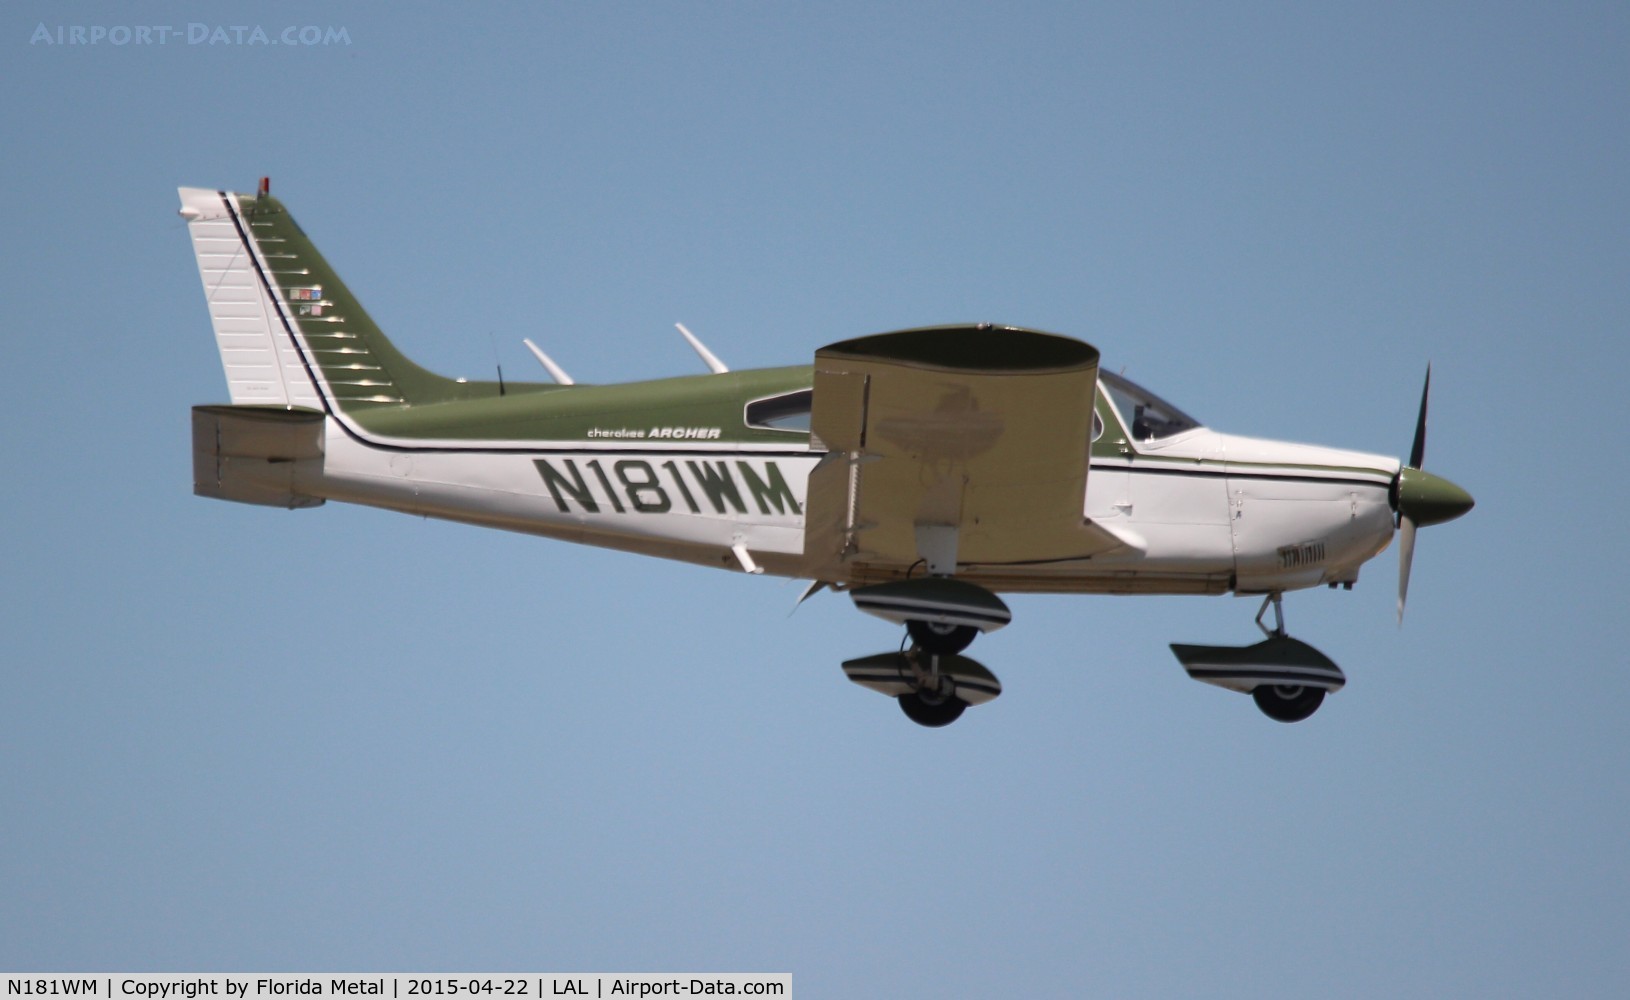 N181WM, 1973 Piper PA-28-180 C/N 28-7405060, PA-28-180